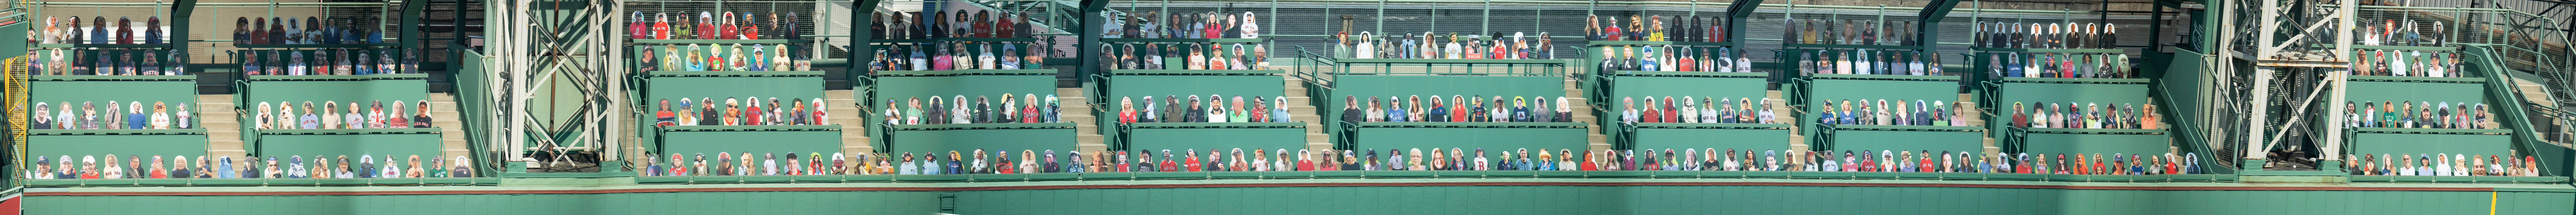 Boston Red Sox cutout fans fill Green Monster seats; 'My eyesight